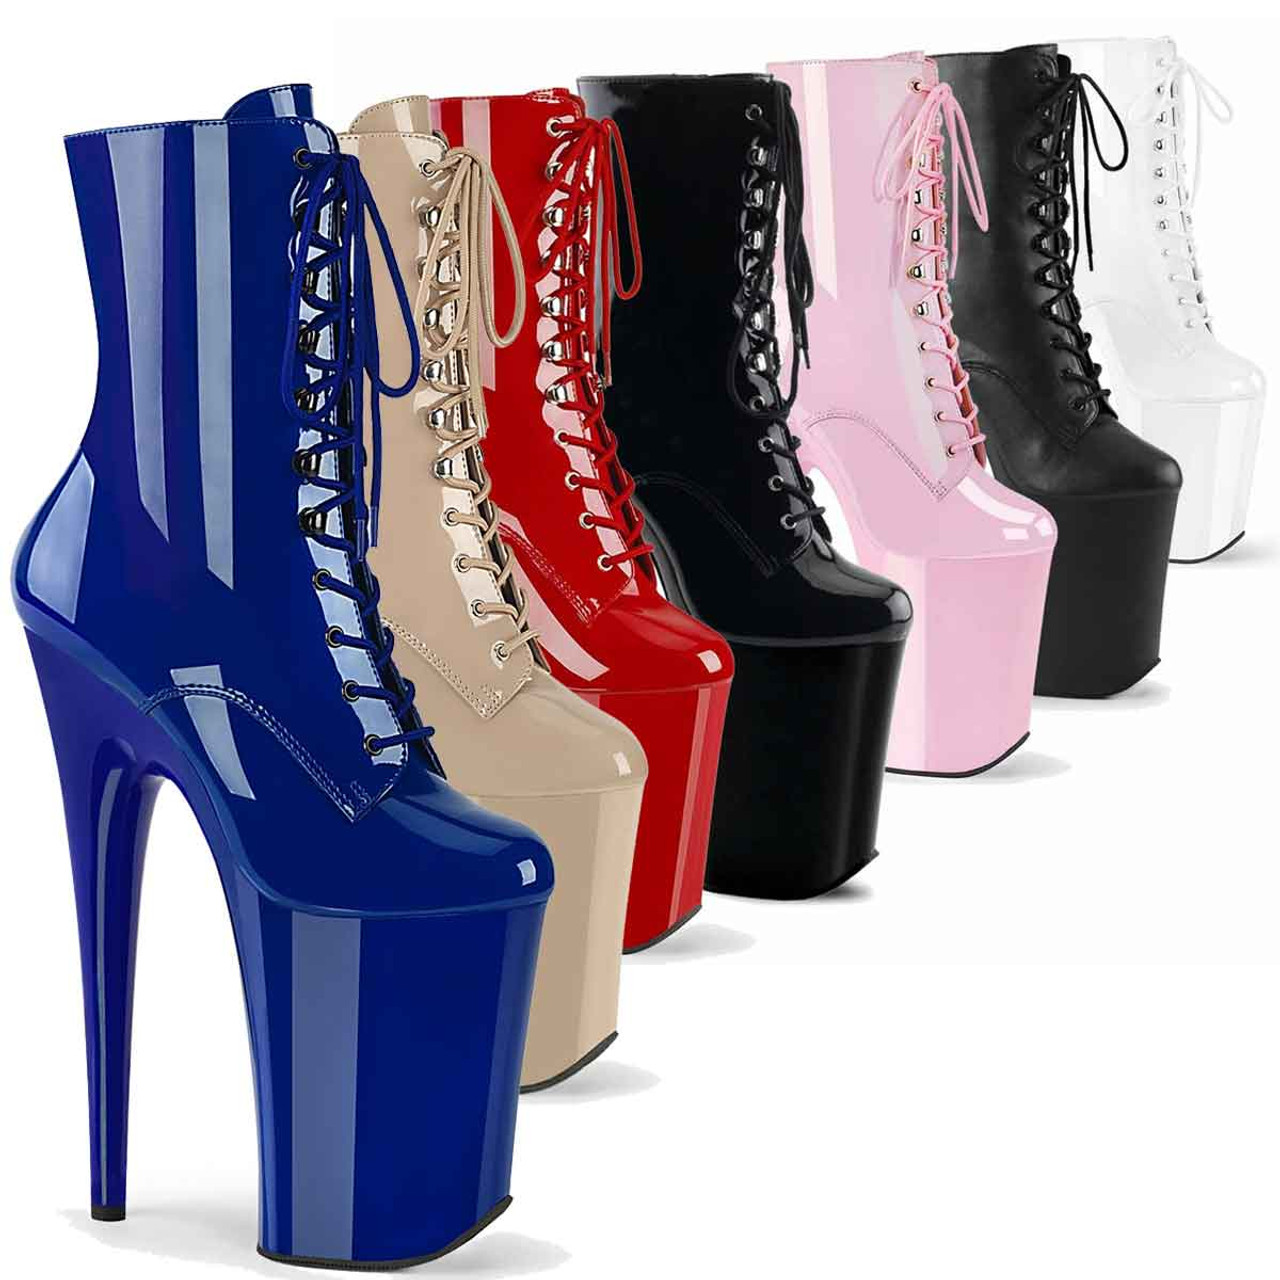 cheryl barlow add photo 9 inch stiletto heels